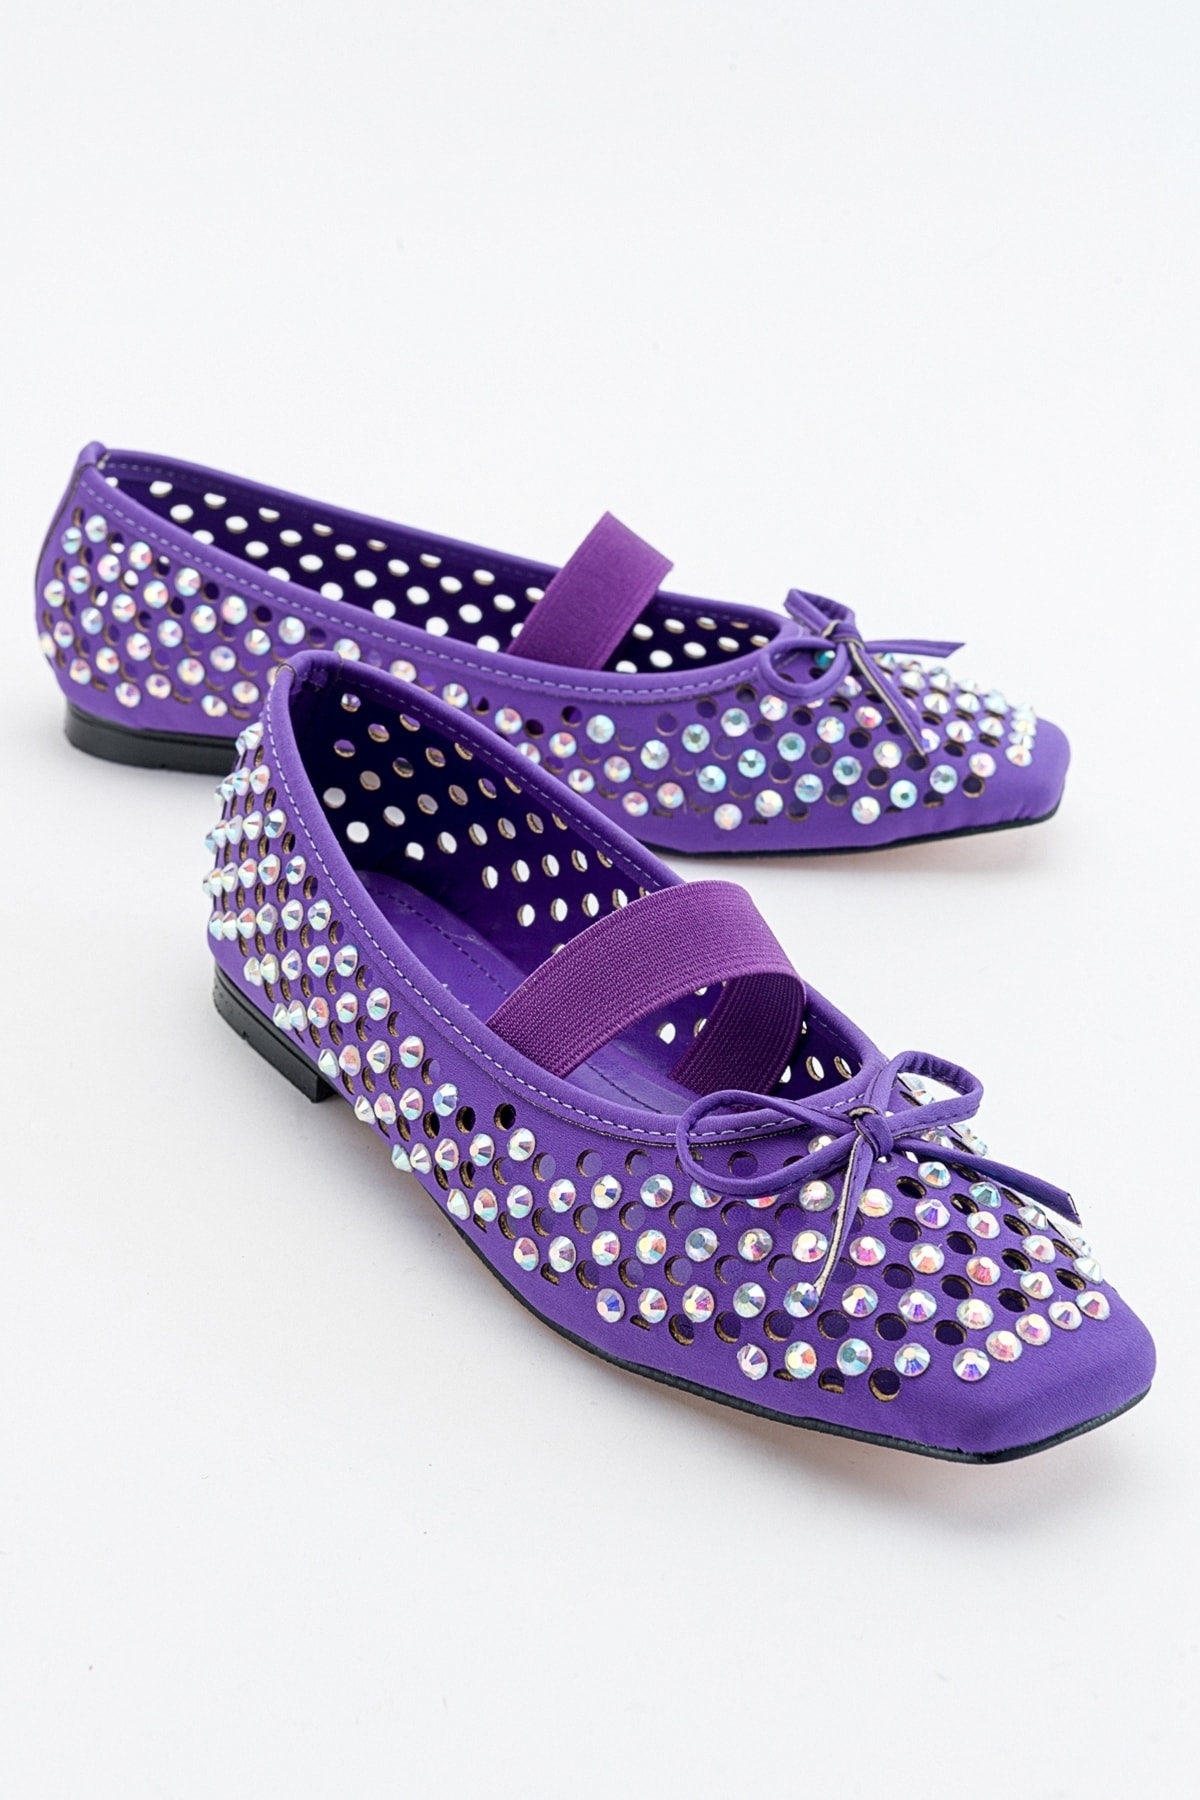 LuviShoes Babes Purple Women's Flats